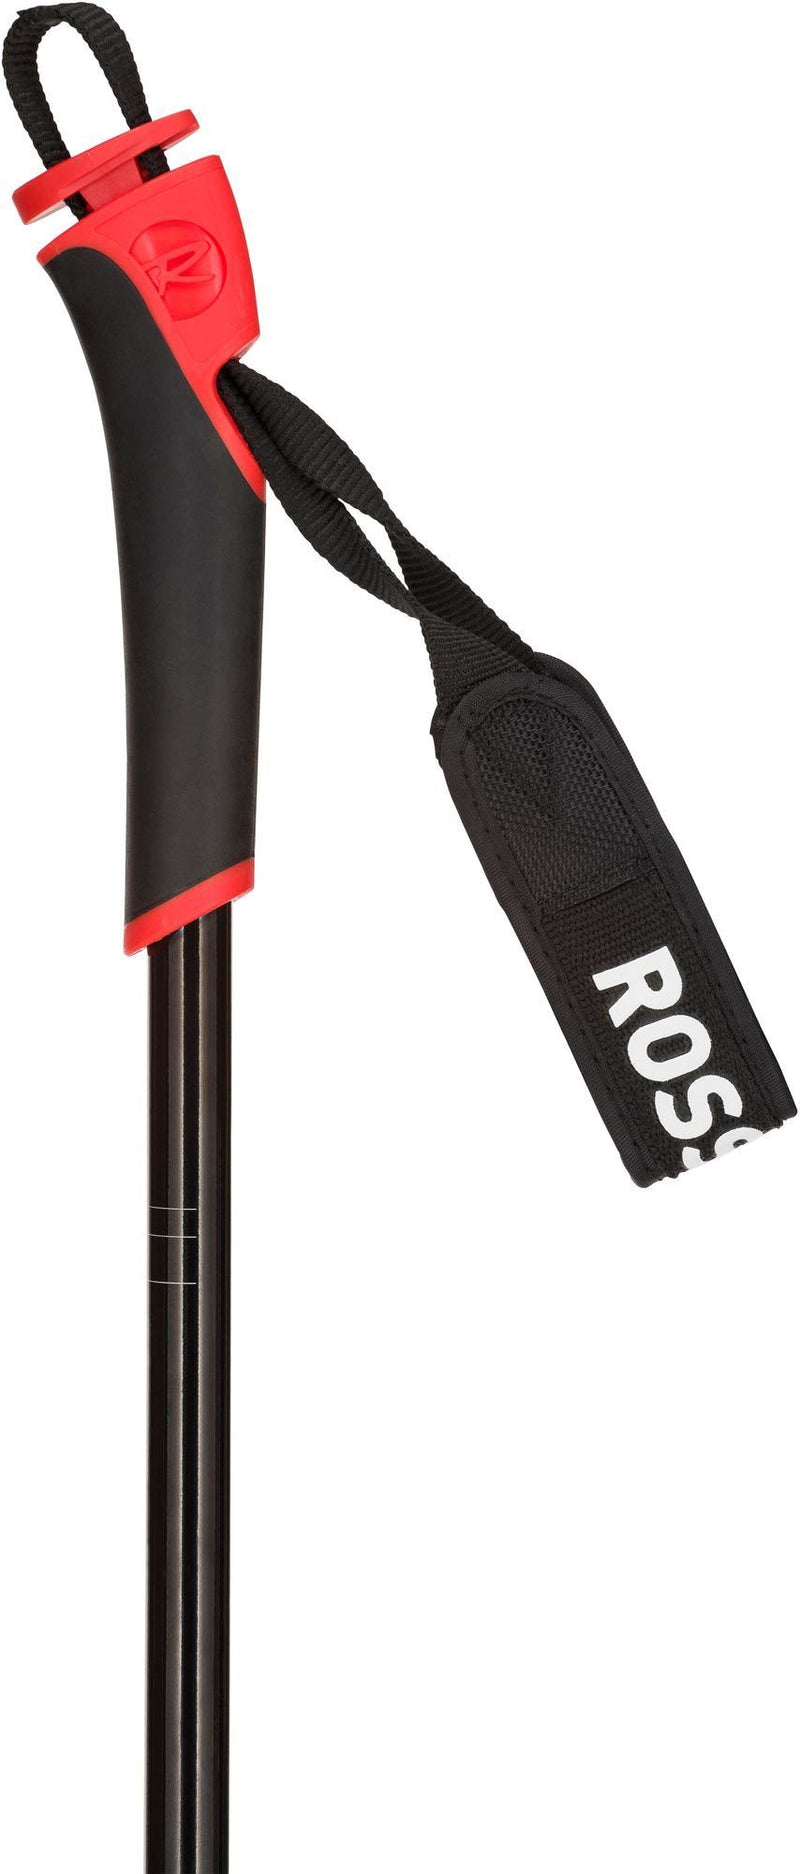 FT-600 cross-country ski poles